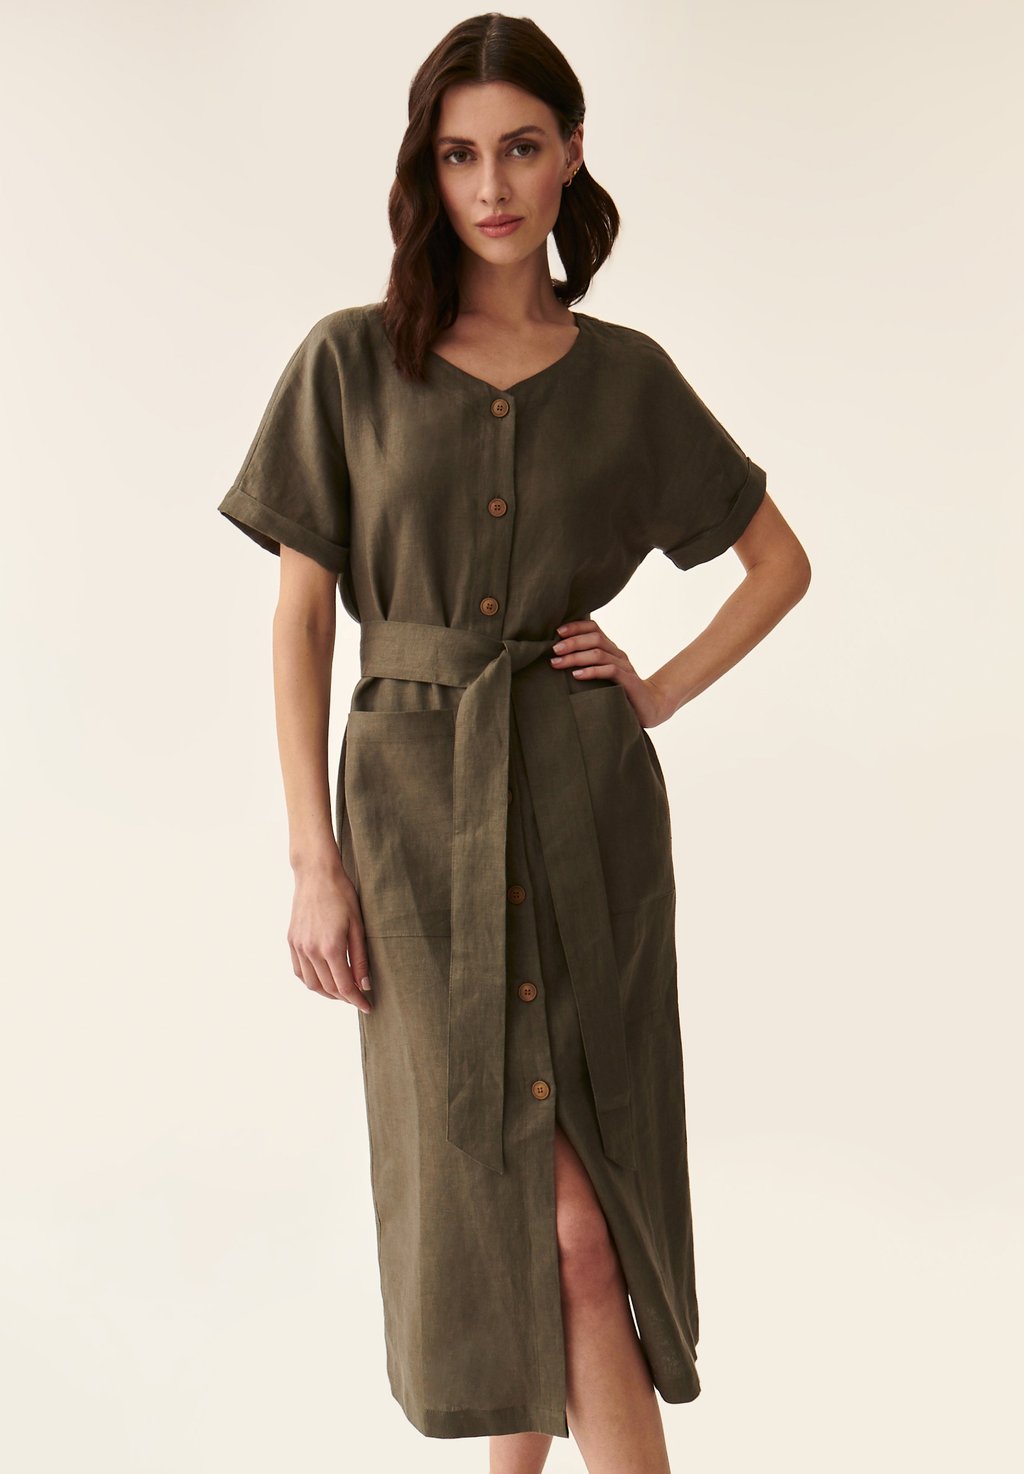 Платье-рубашка TATUUM платье рубашка samotali tatuum коричневый